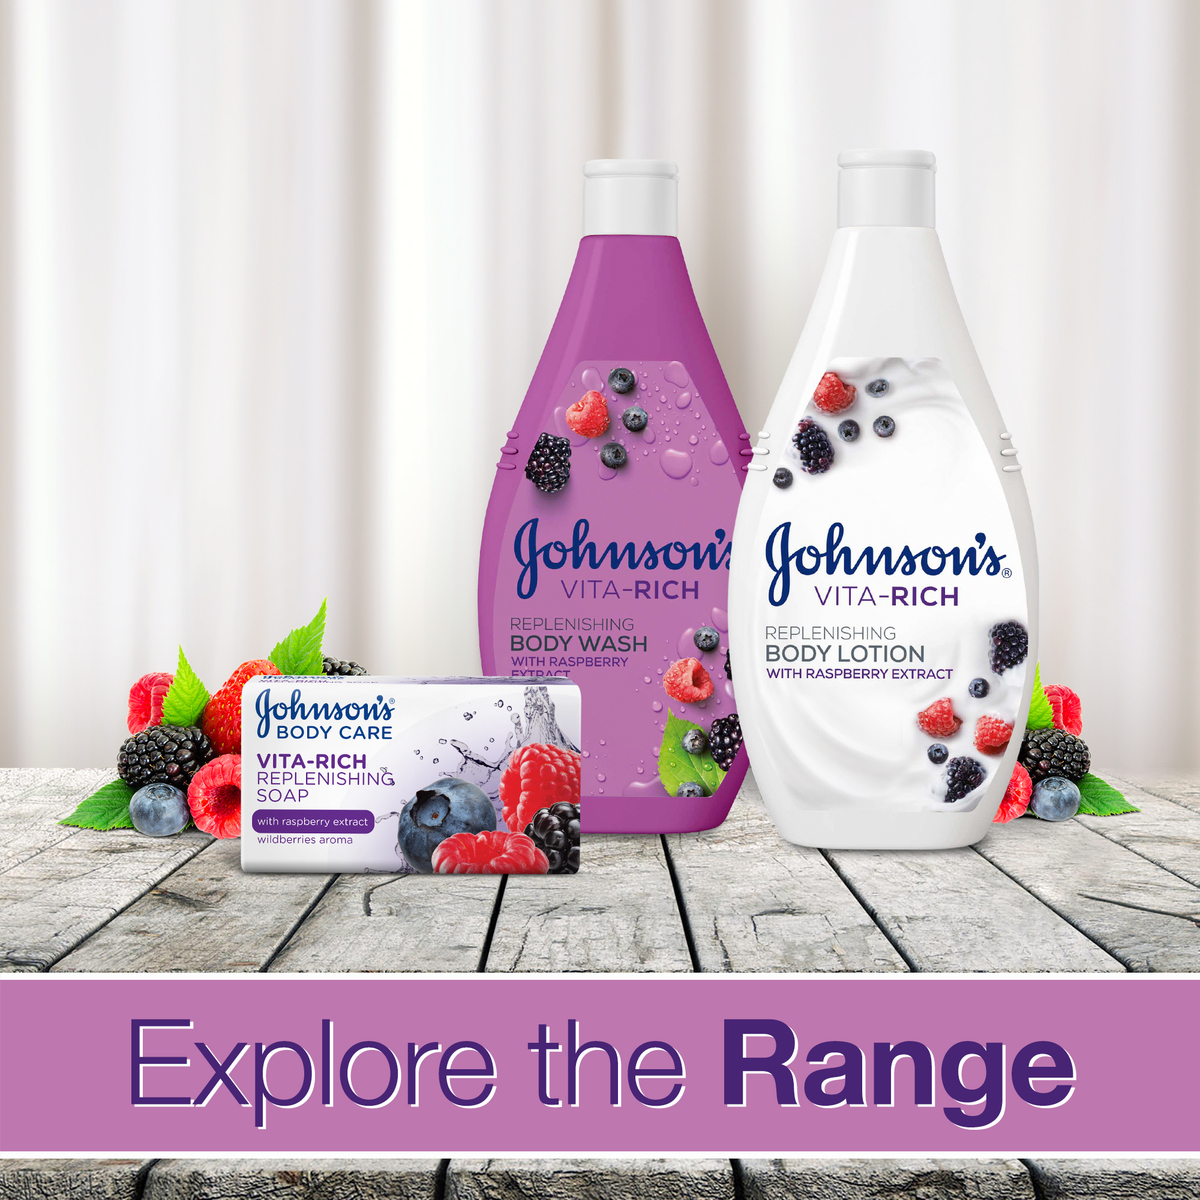 Johnson's Body Soap Vita-Rich Replenishing 125 g